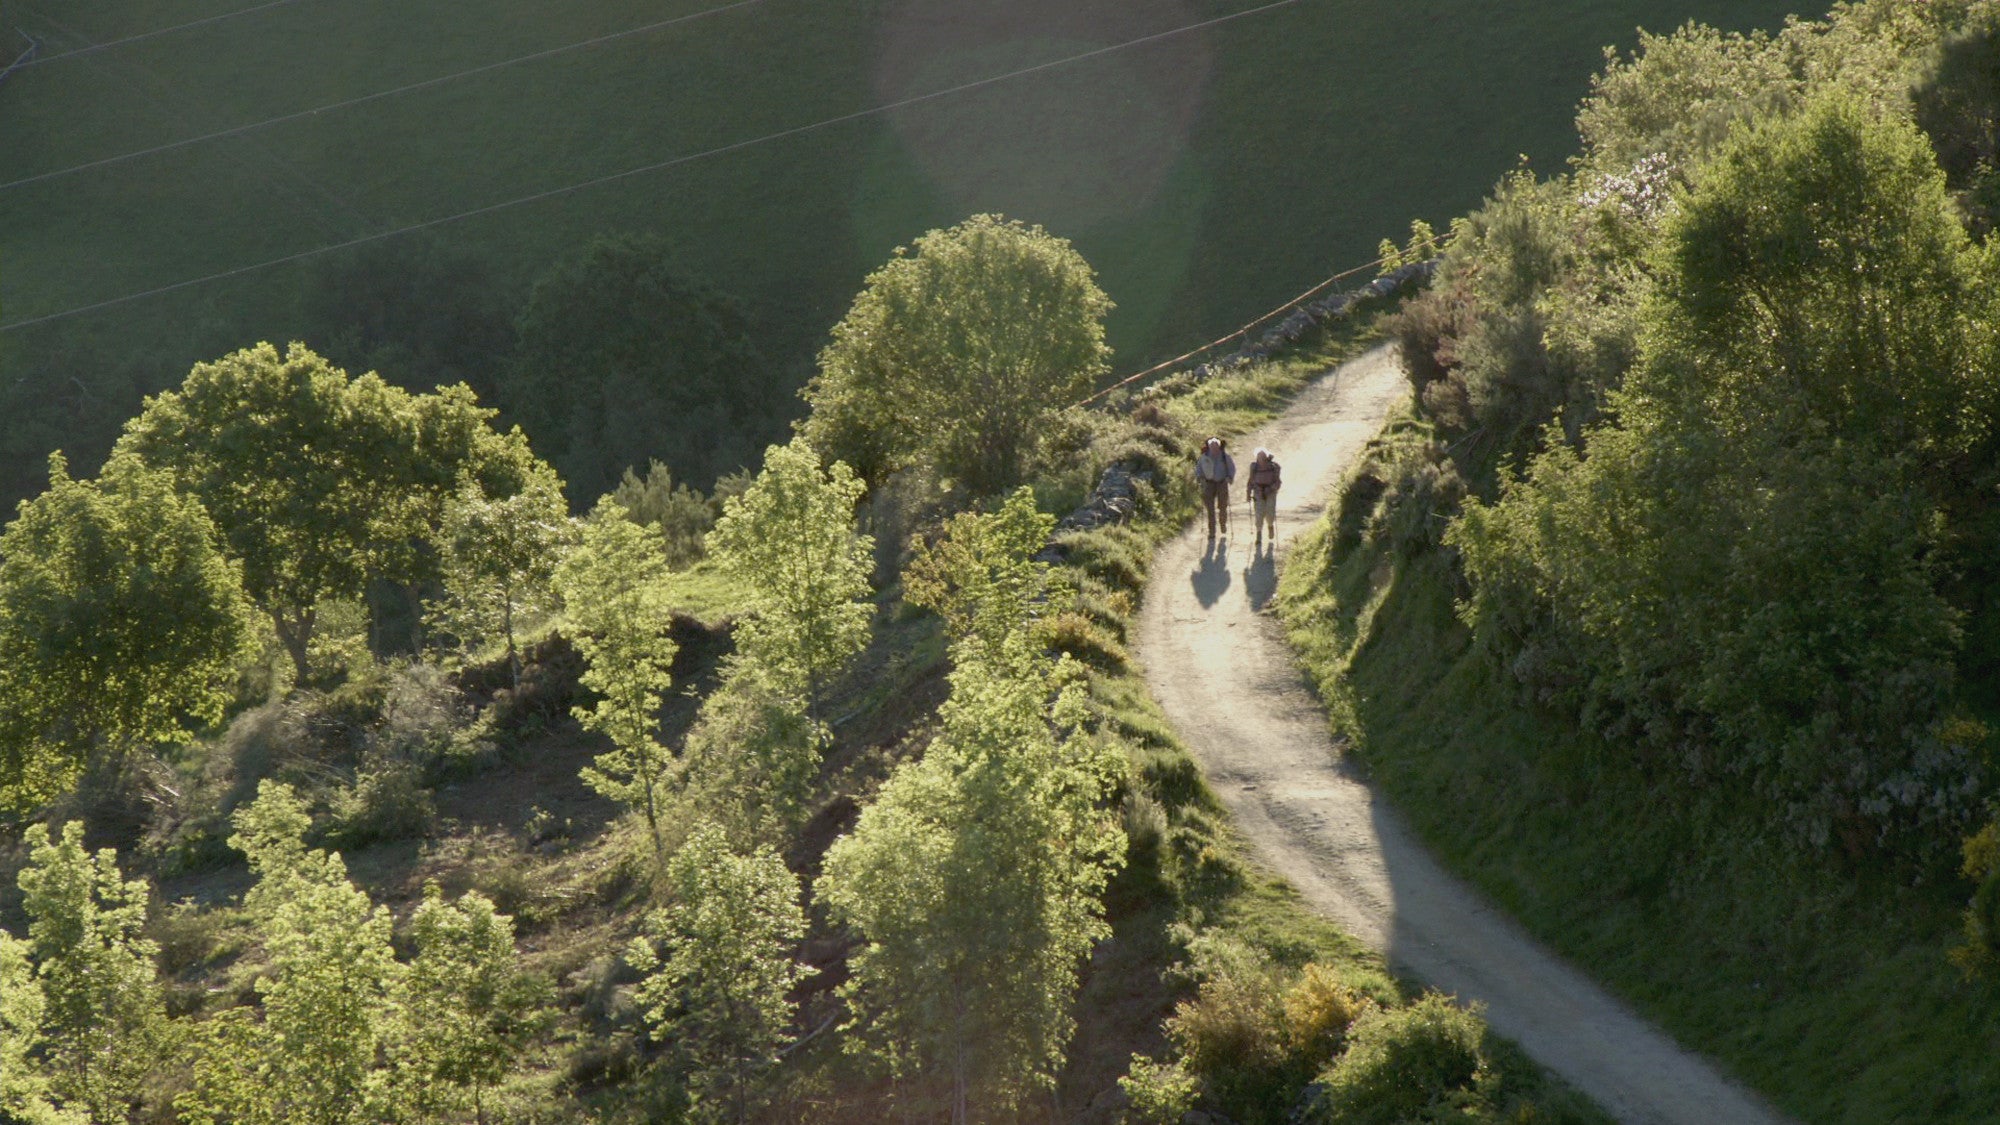 Scene from documentary "Walking the Camino"